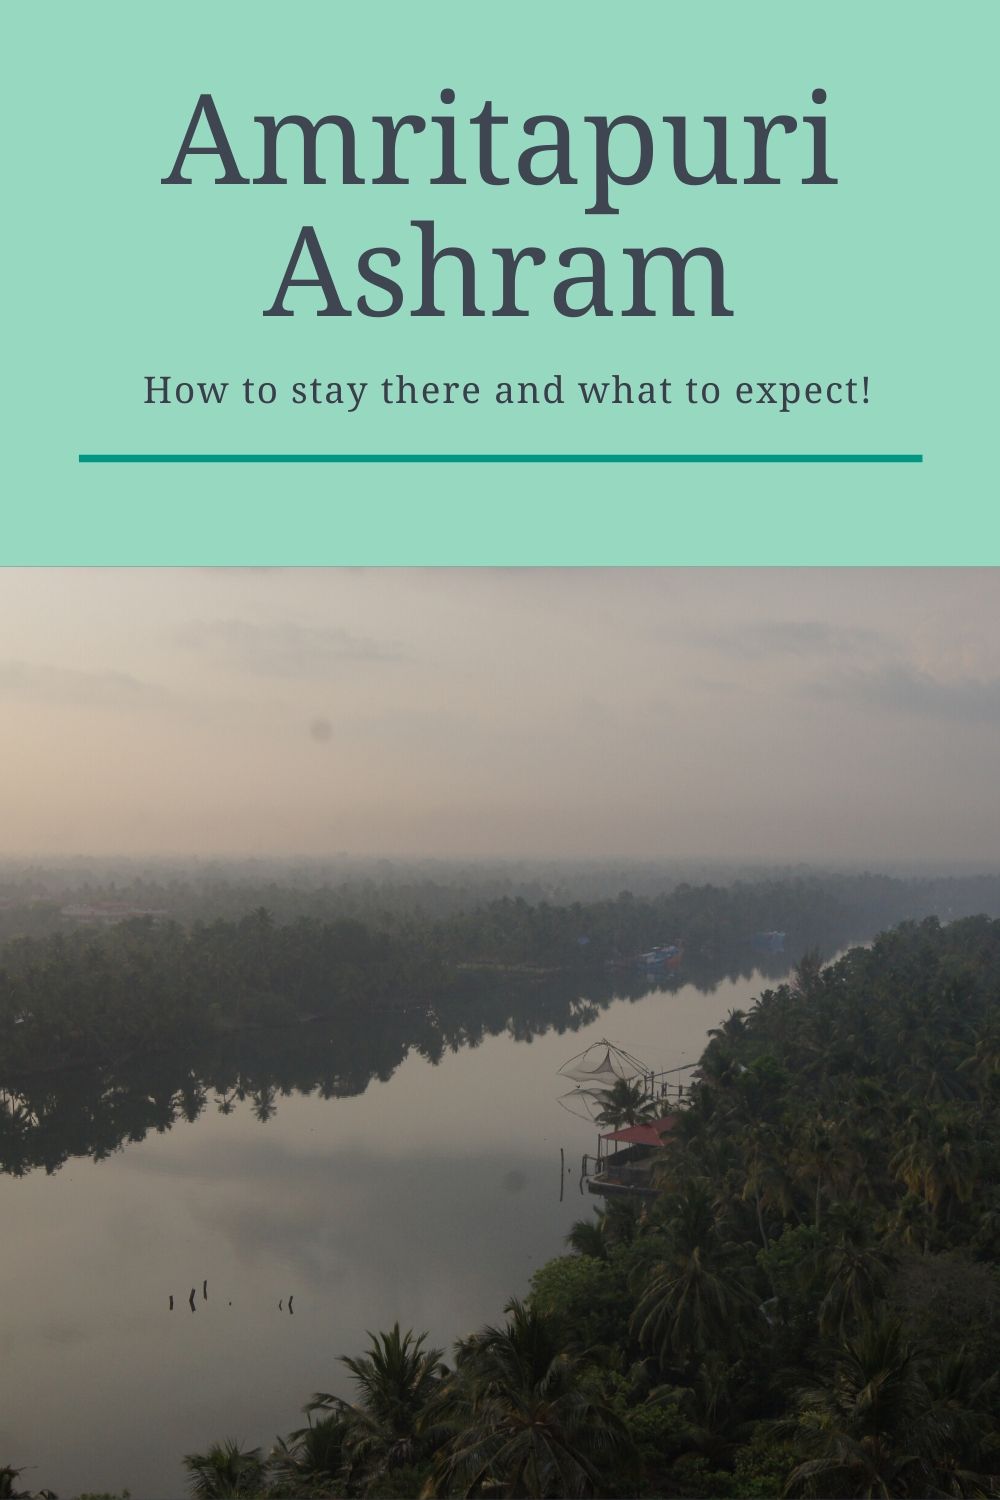 Amritapuri Ashram